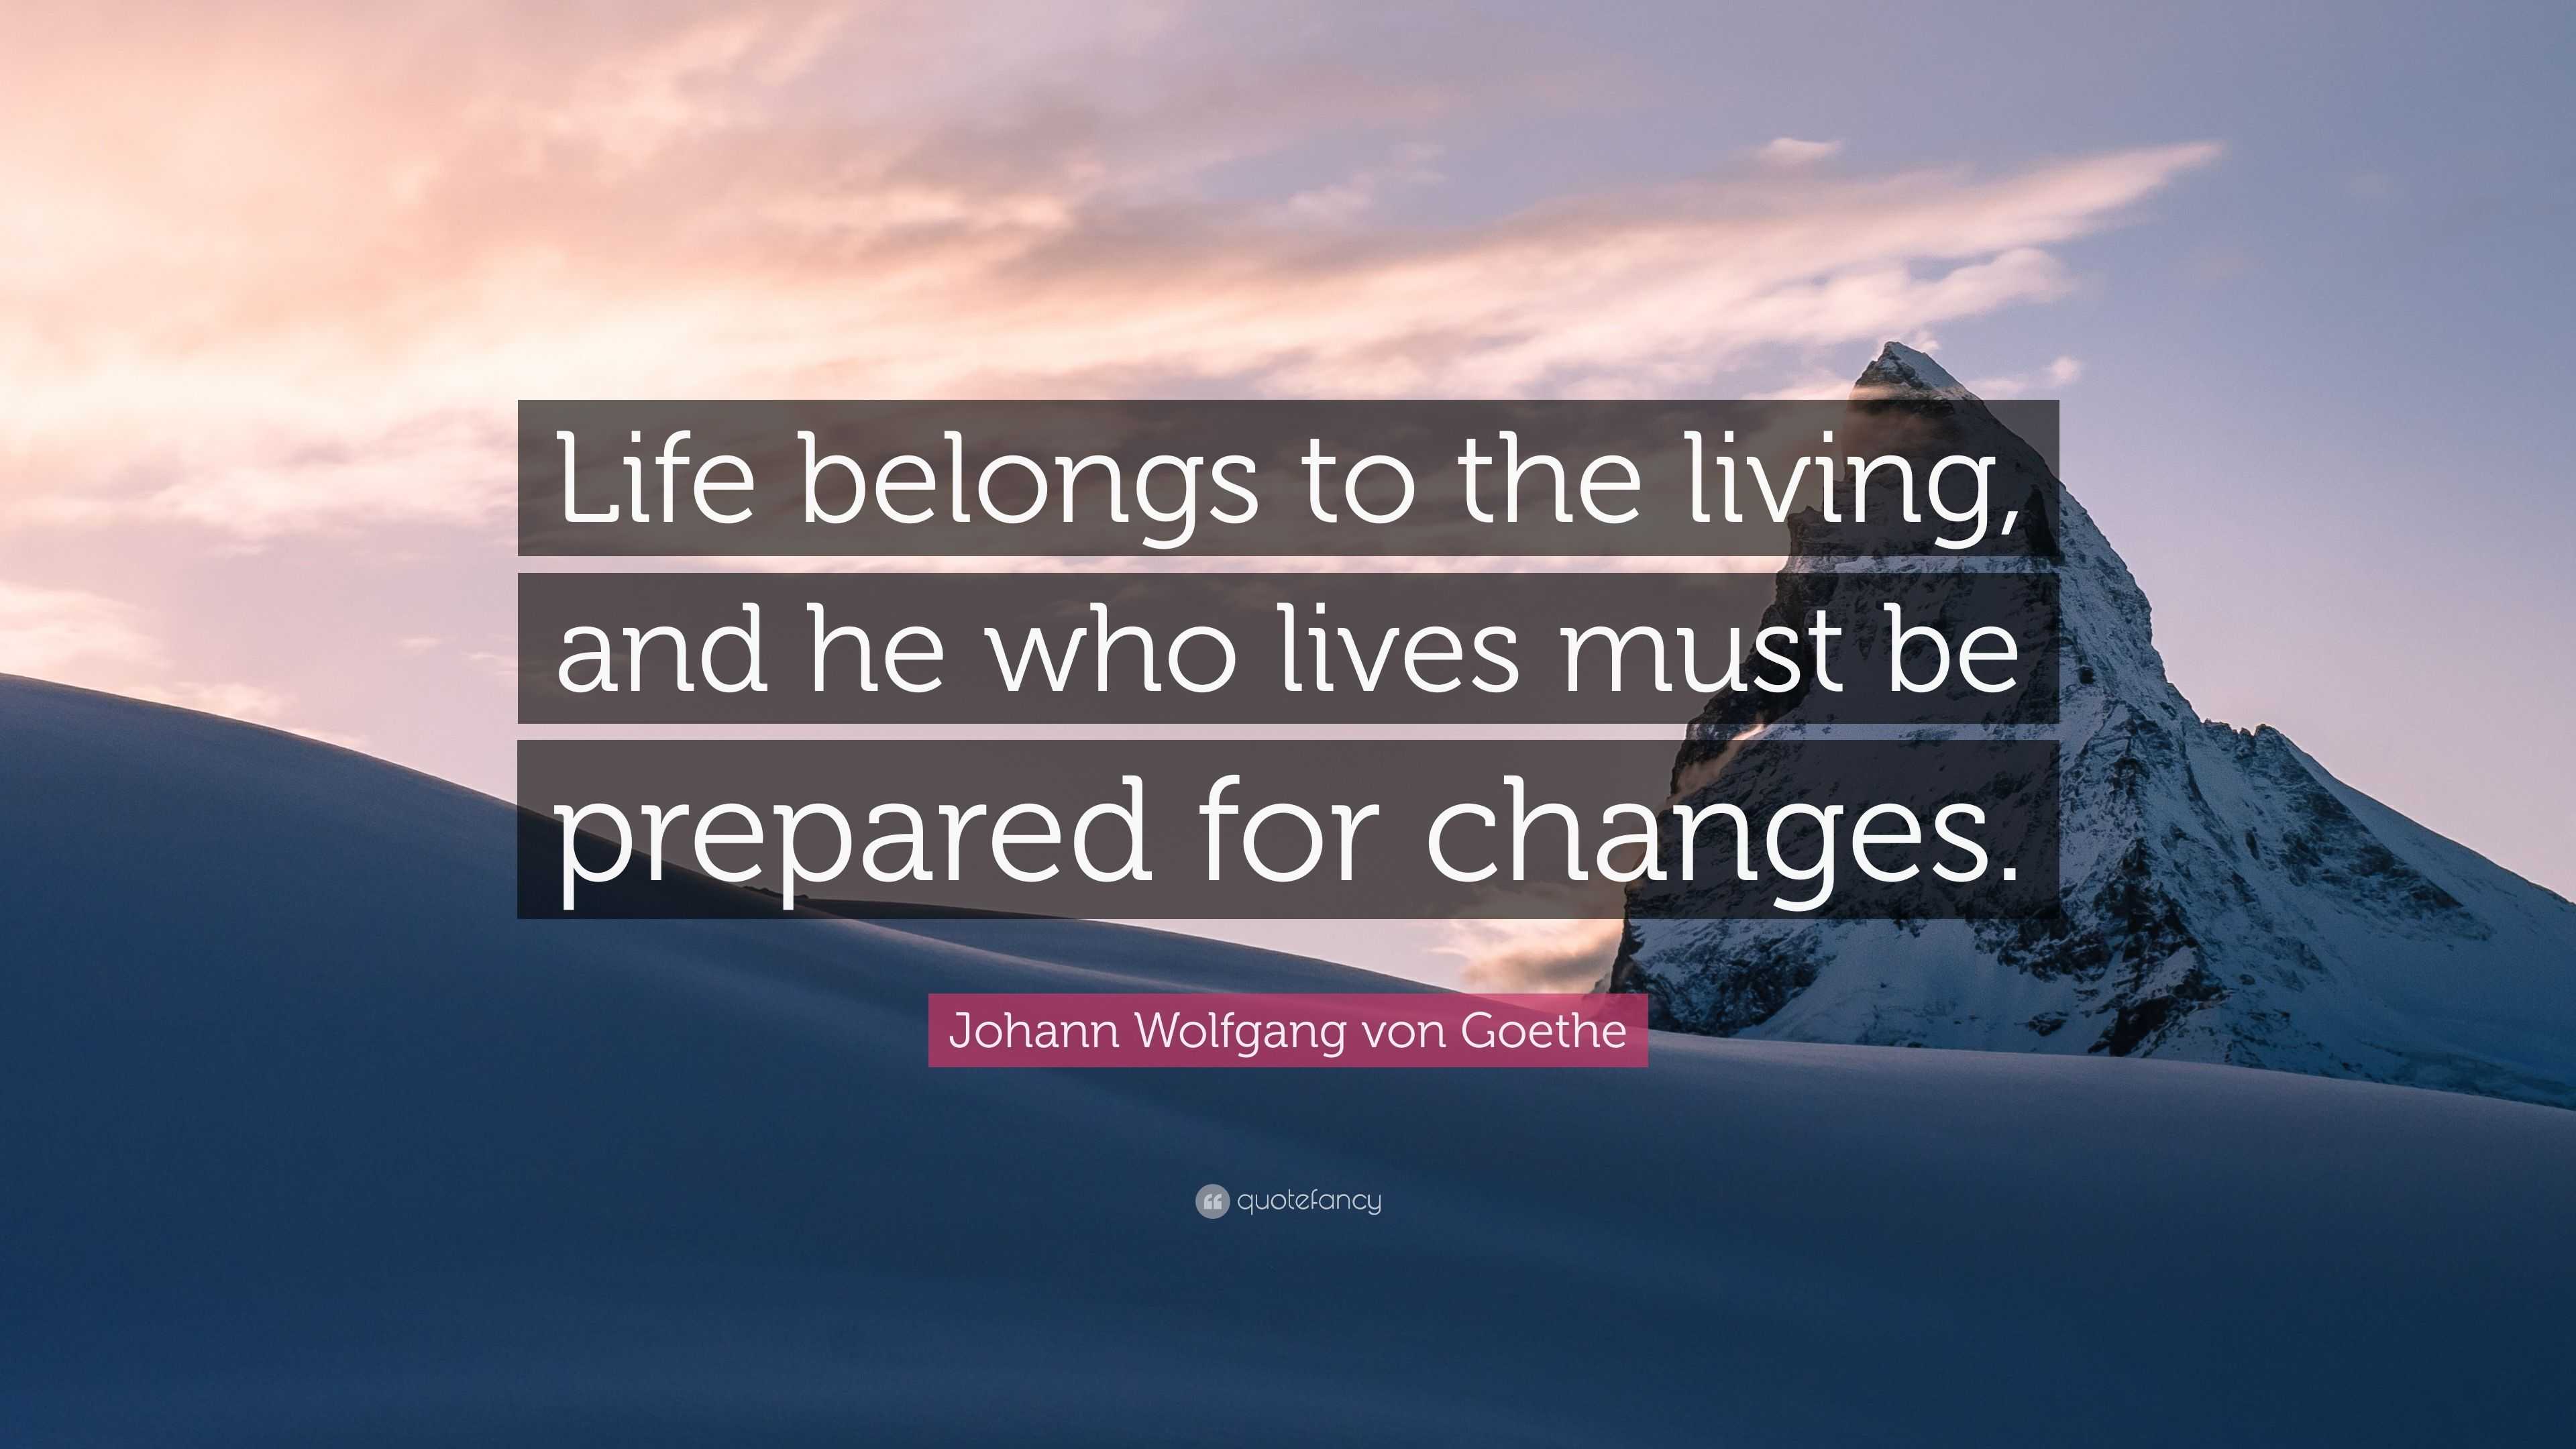 https://quotefancy.com/media/wallpaper/3840x2160/2133117-Johann-Wolfgang-von-Goethe-Quote-Life-belongs-to-the-living-and-he.jpg